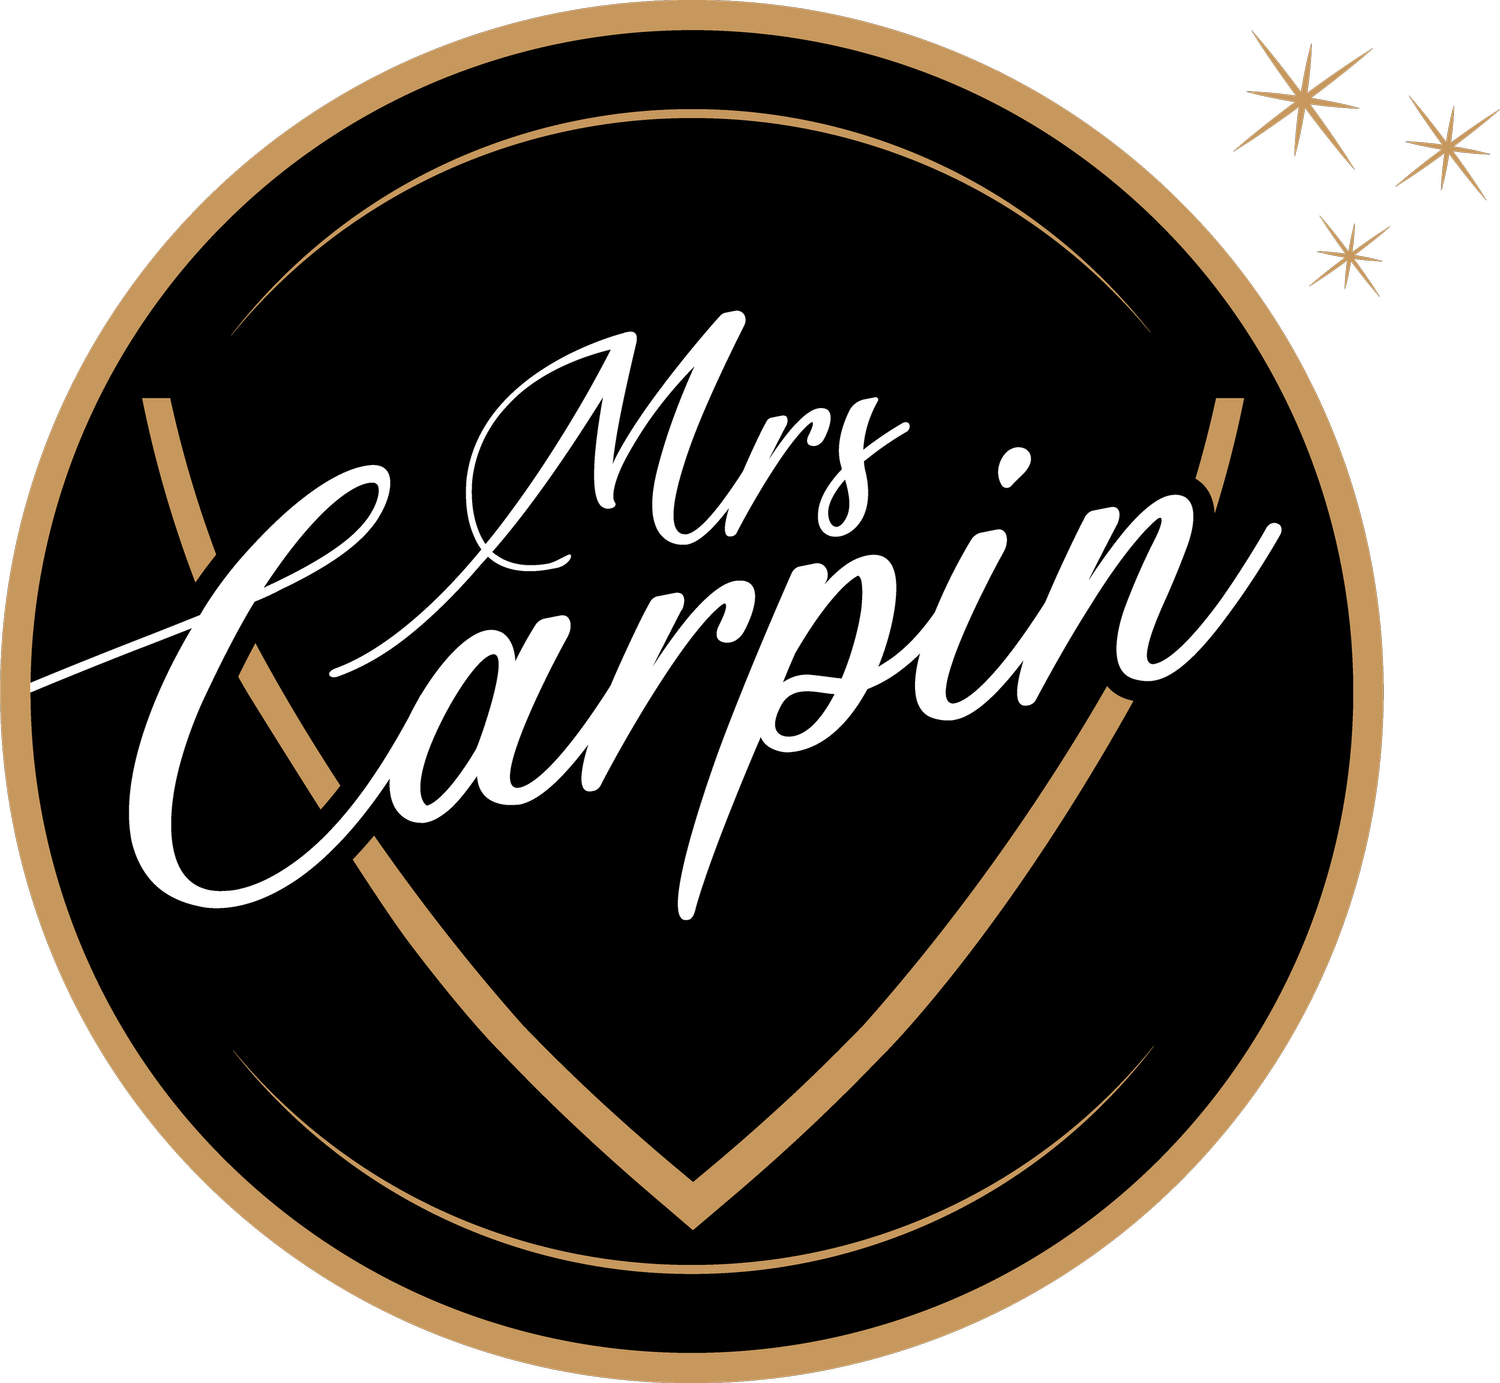 Mrs. Carpin